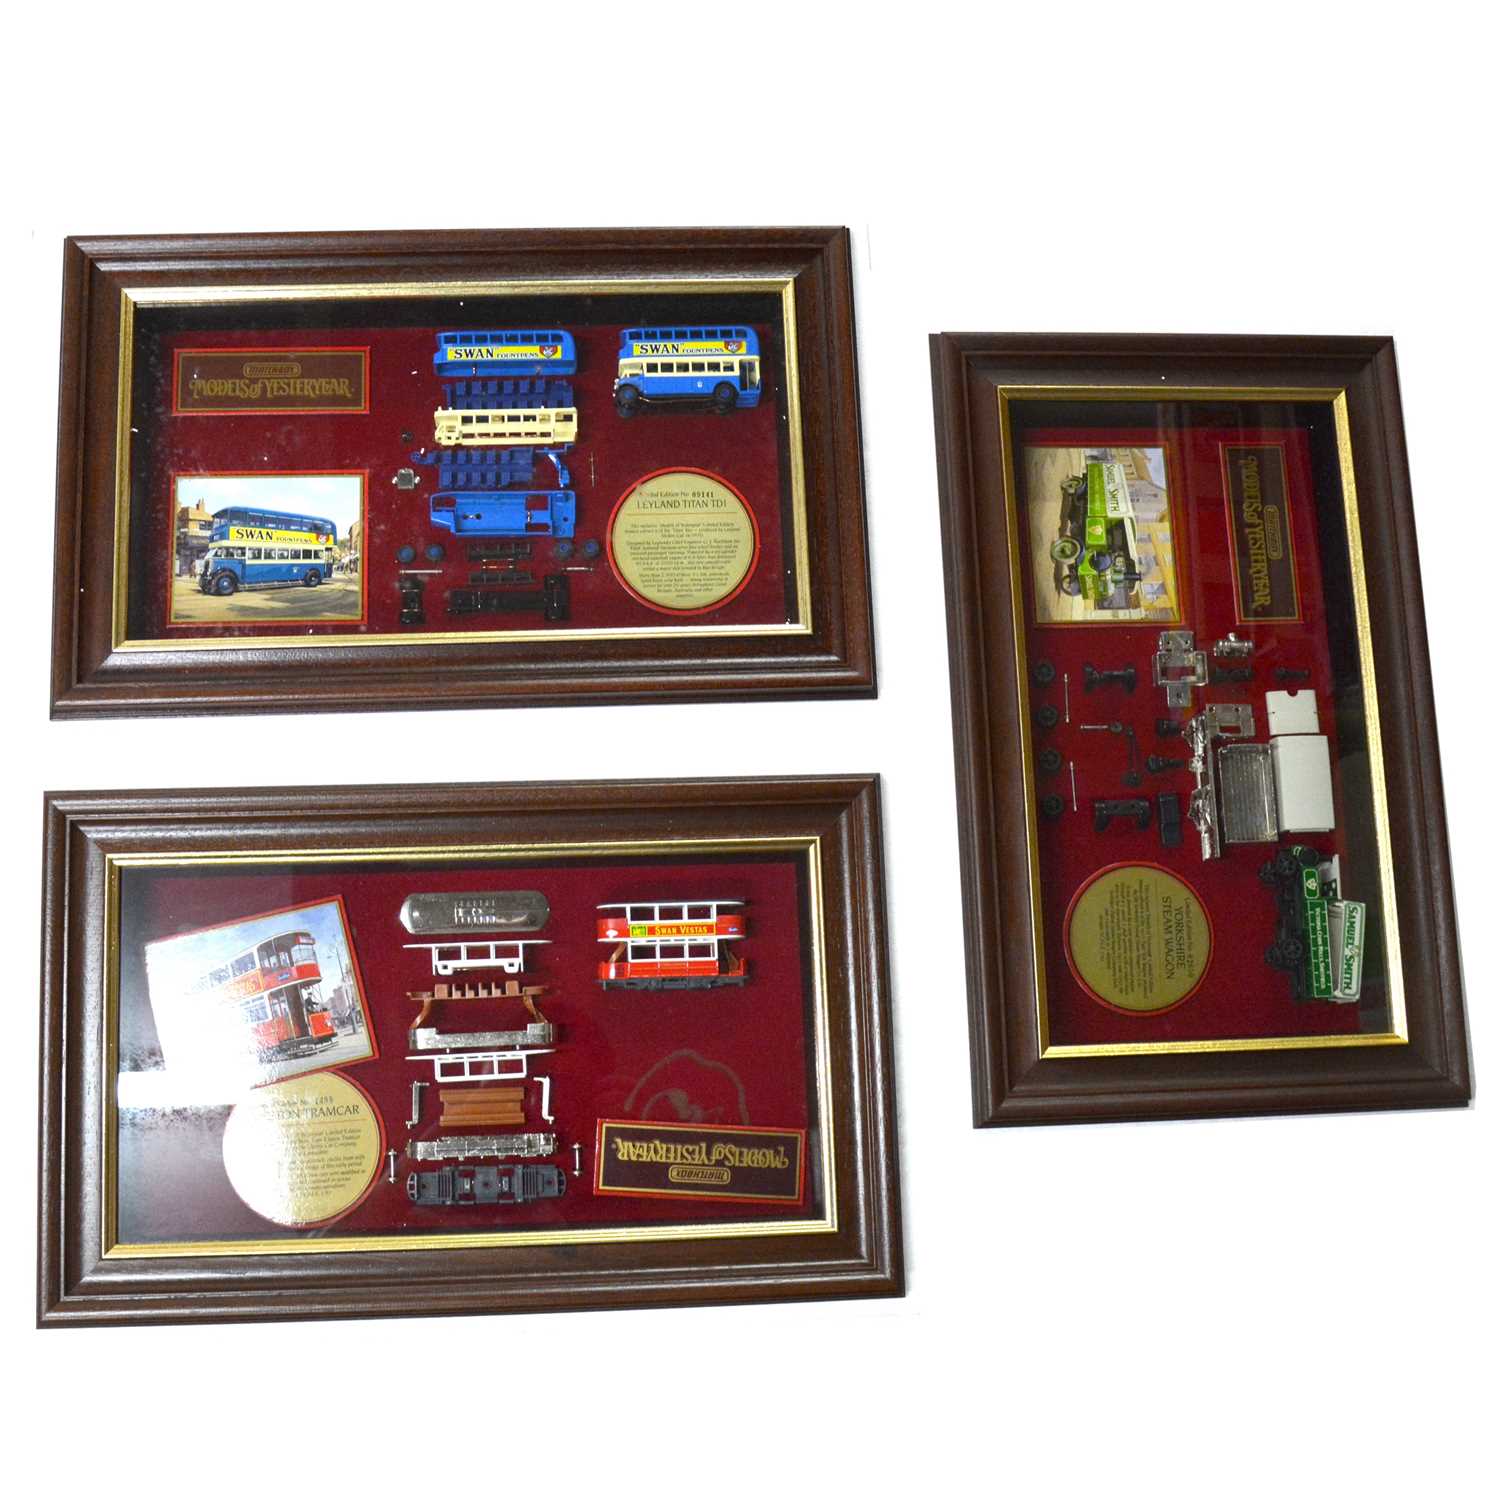 Three limited edition framed Matchbox die-cast model displays